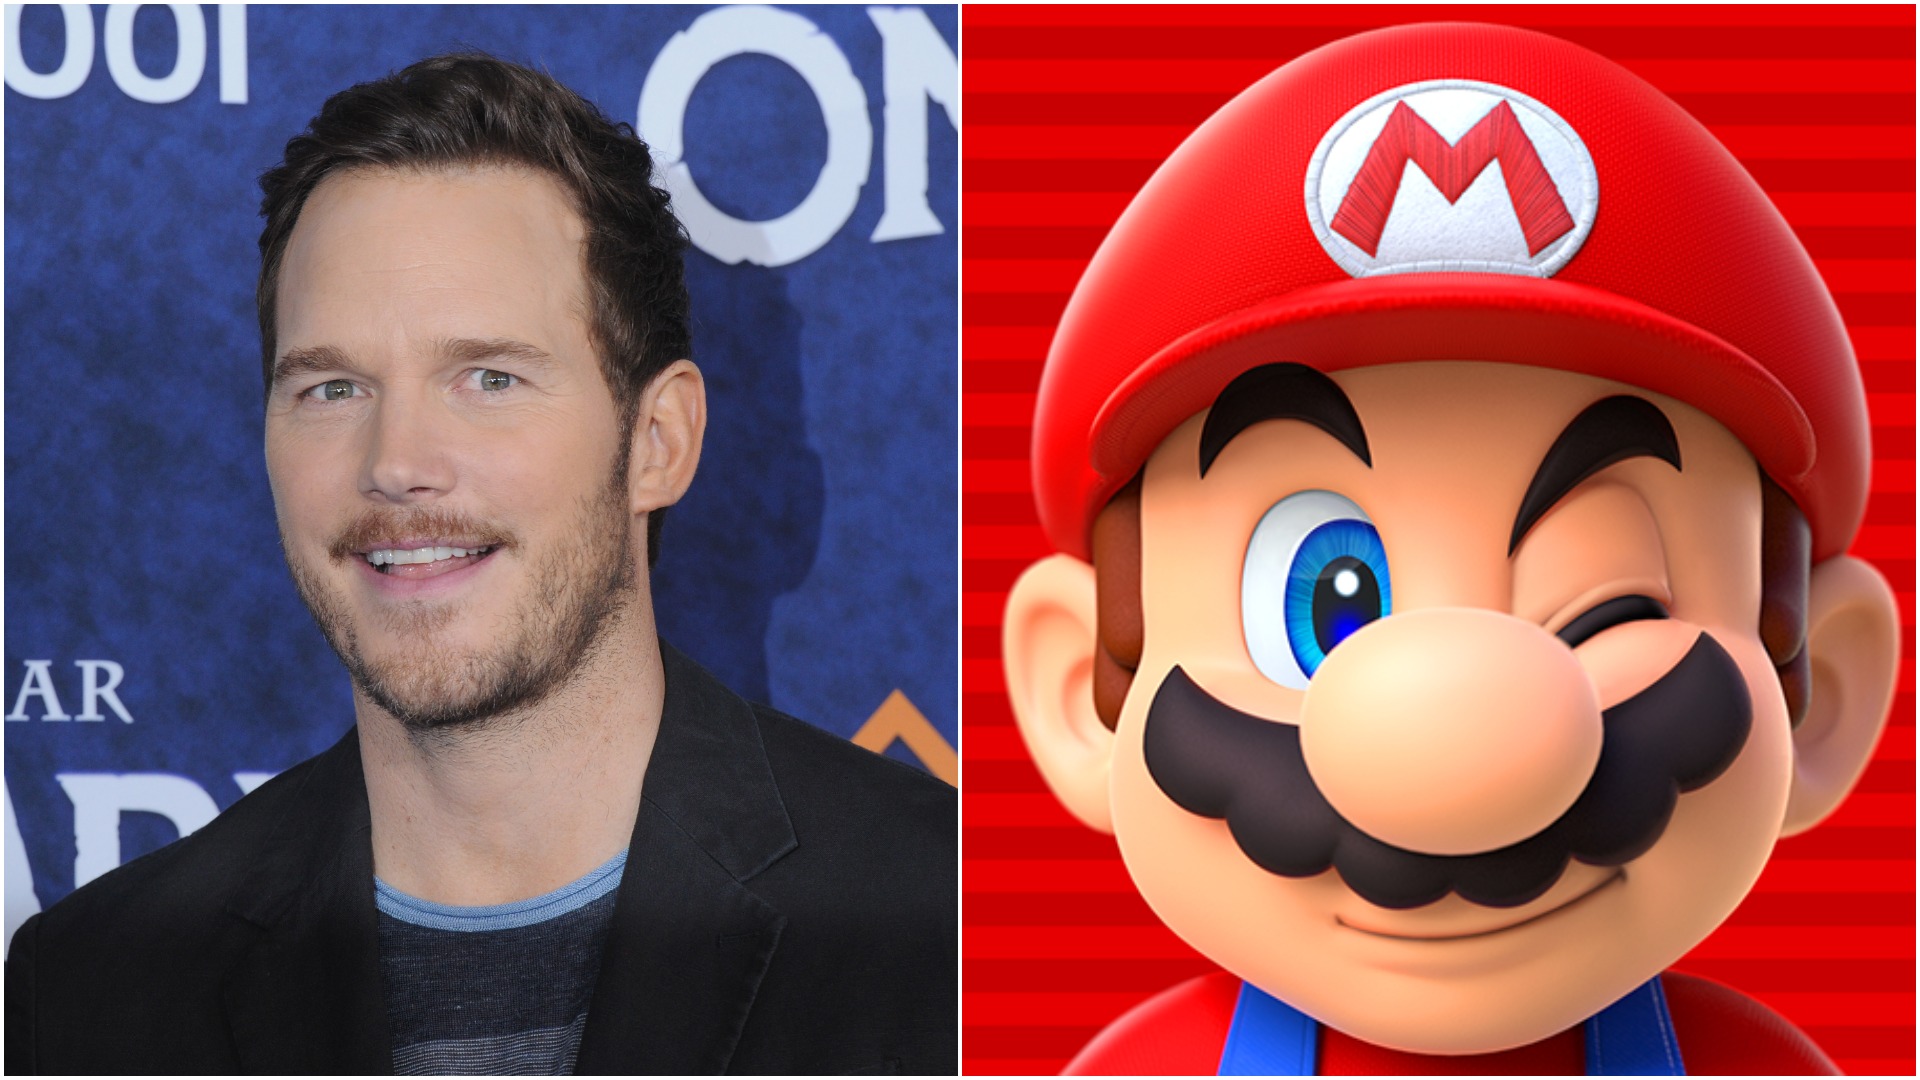 Chris Pratt Playing Mario in the Nintendo Movie Has Inspired Strong